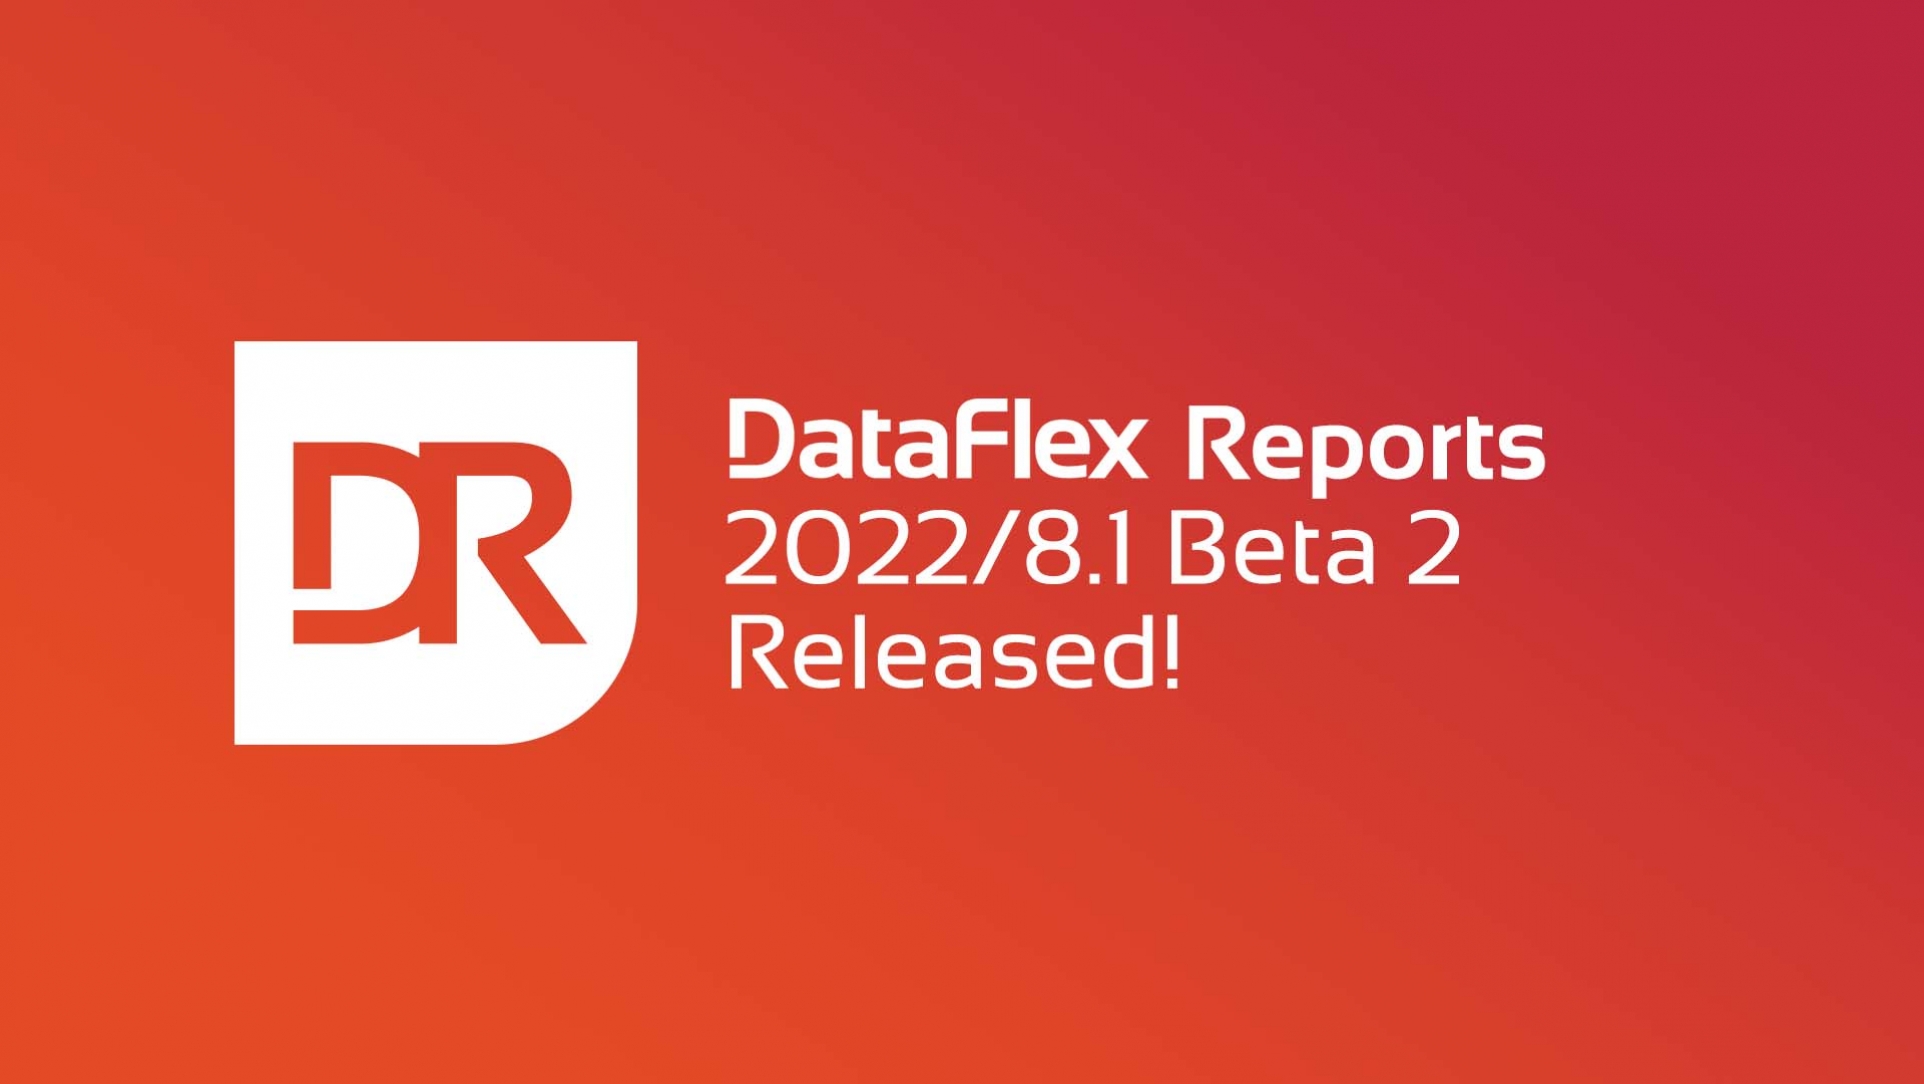 DataFlex Reports 2022/8.1 Beta 2